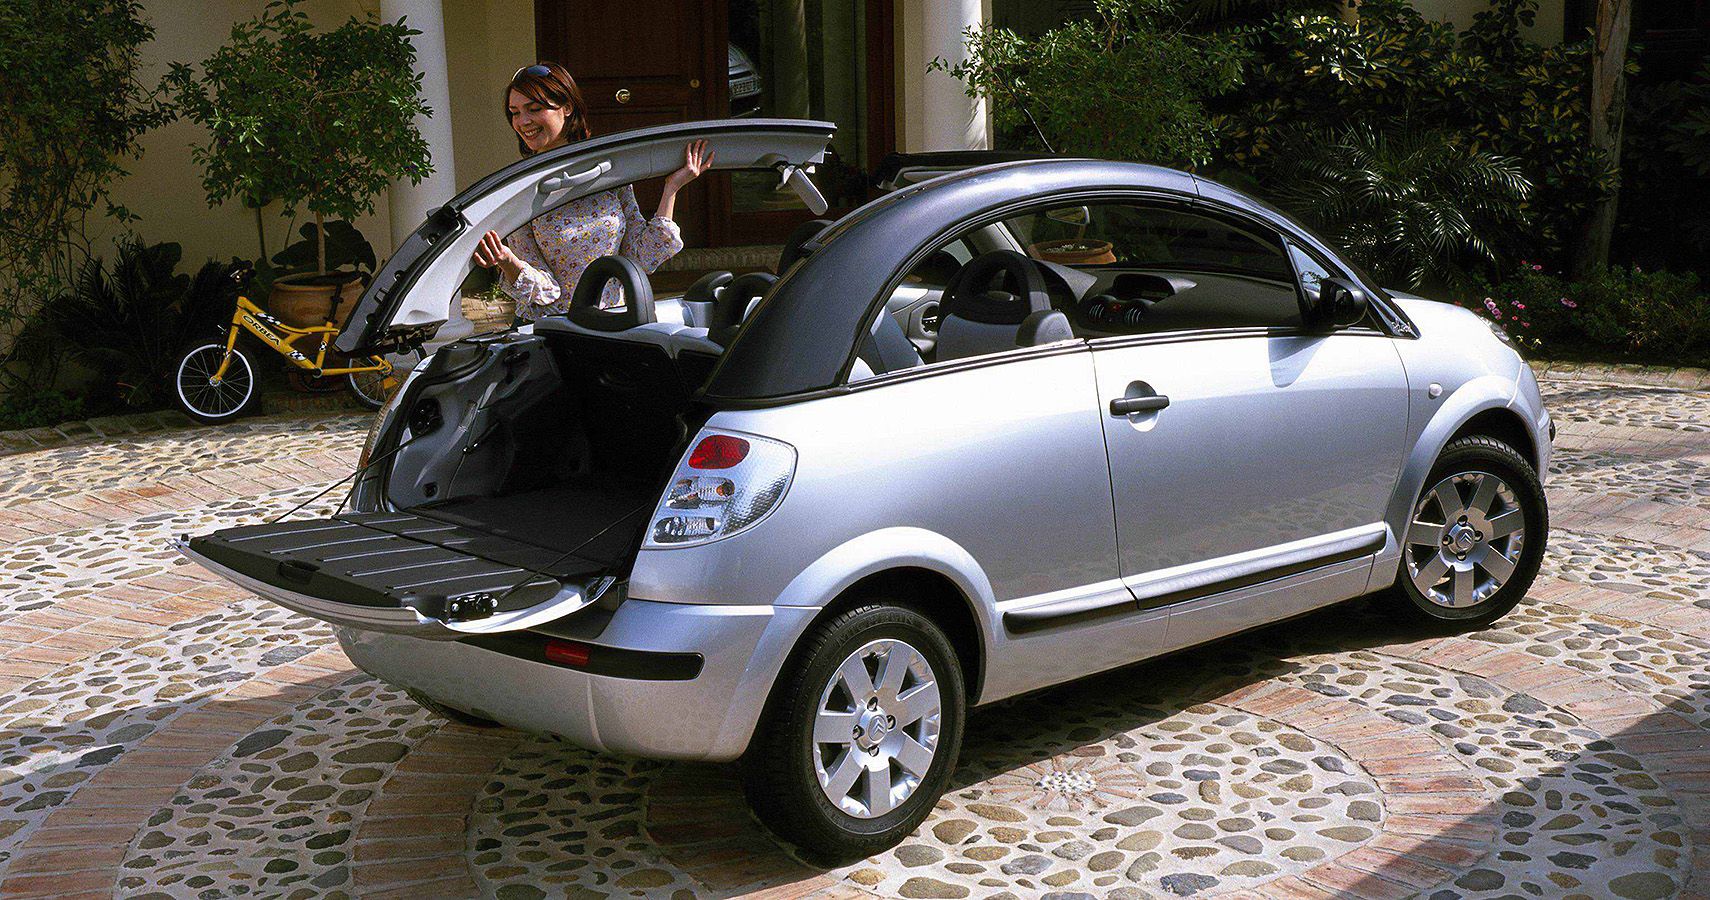 2003-2010 Citroën C3 Pluriel: Had Problems In Plural